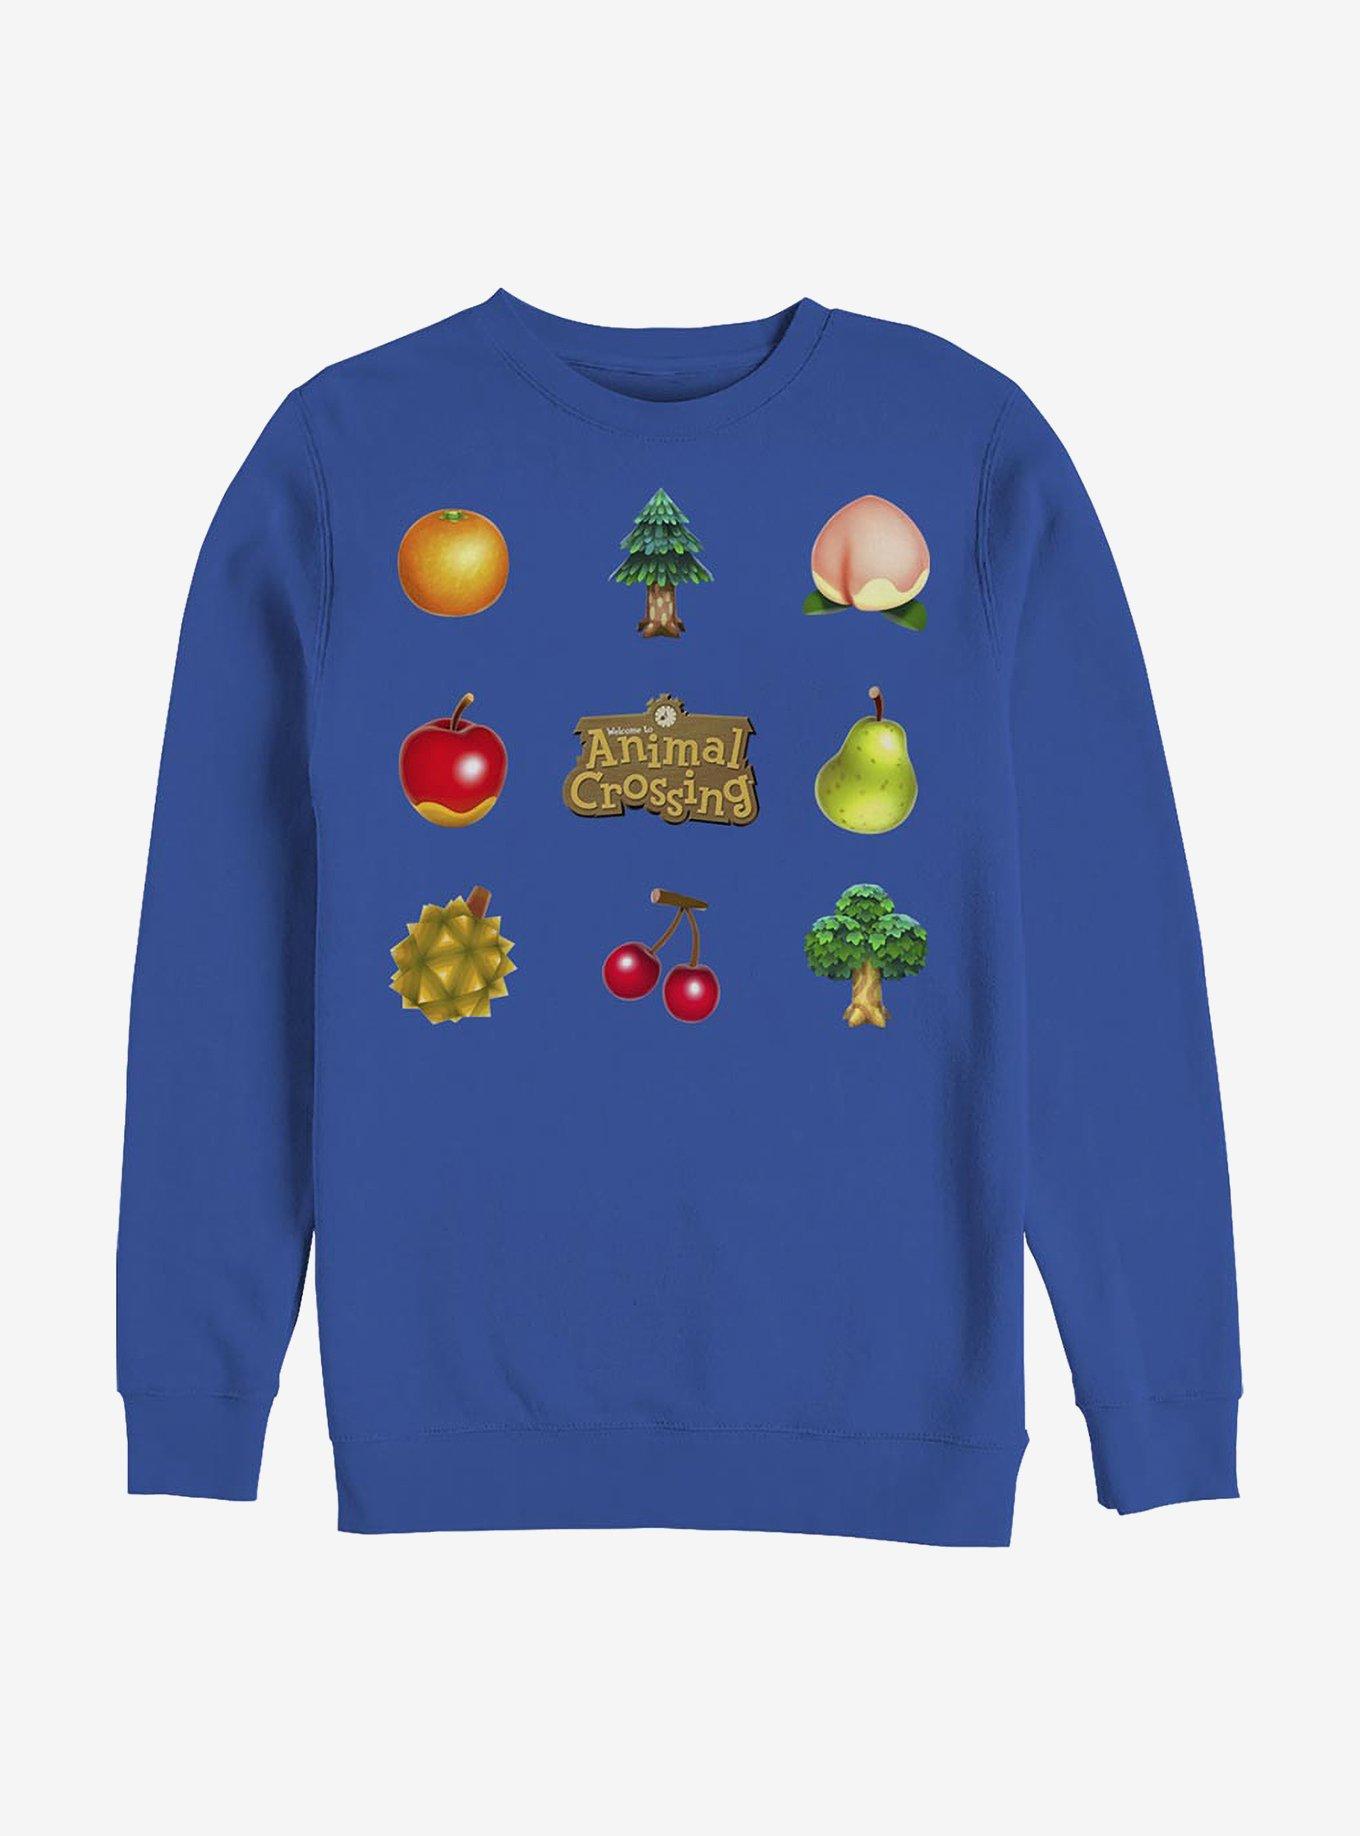 Nintendo Animal Crossing Items Crew Sweatshirt